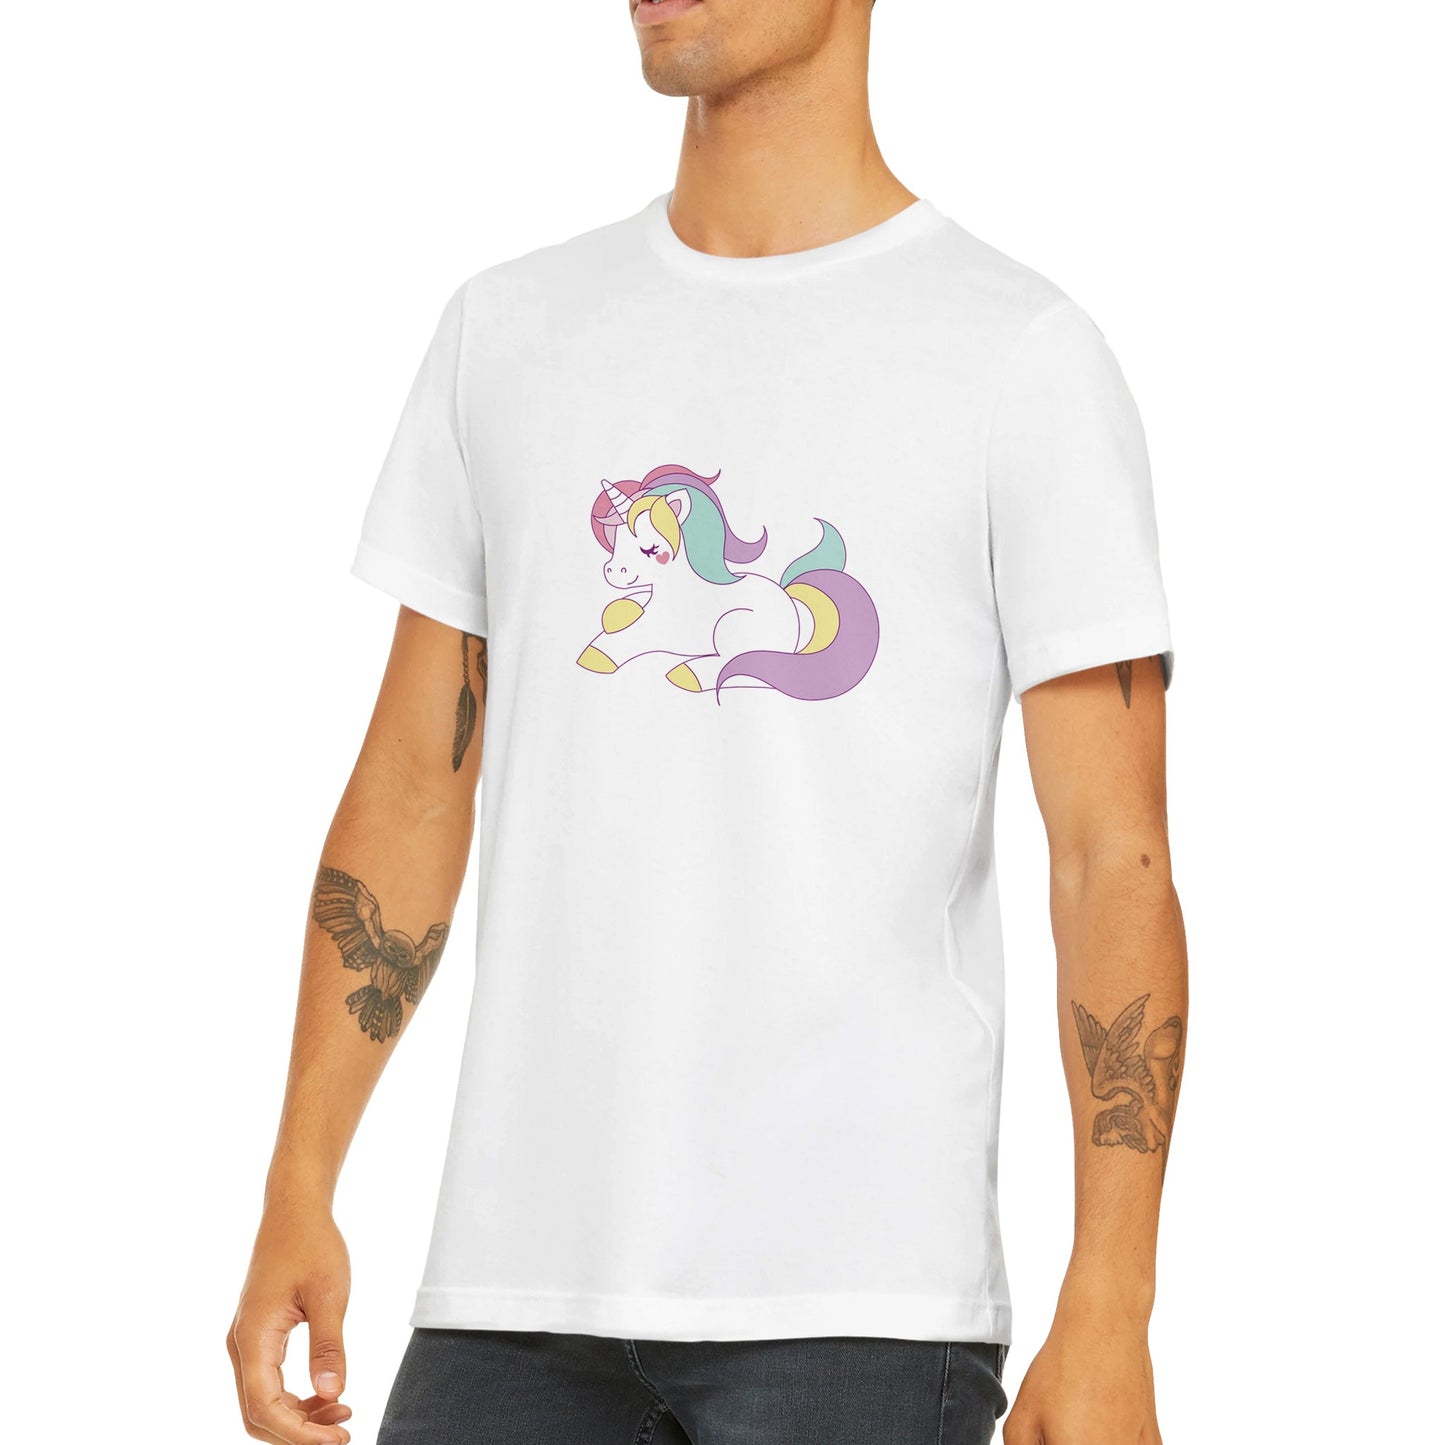 Artwork T-shirt - Unicorn Artwork - Premium Unisex T-shirt